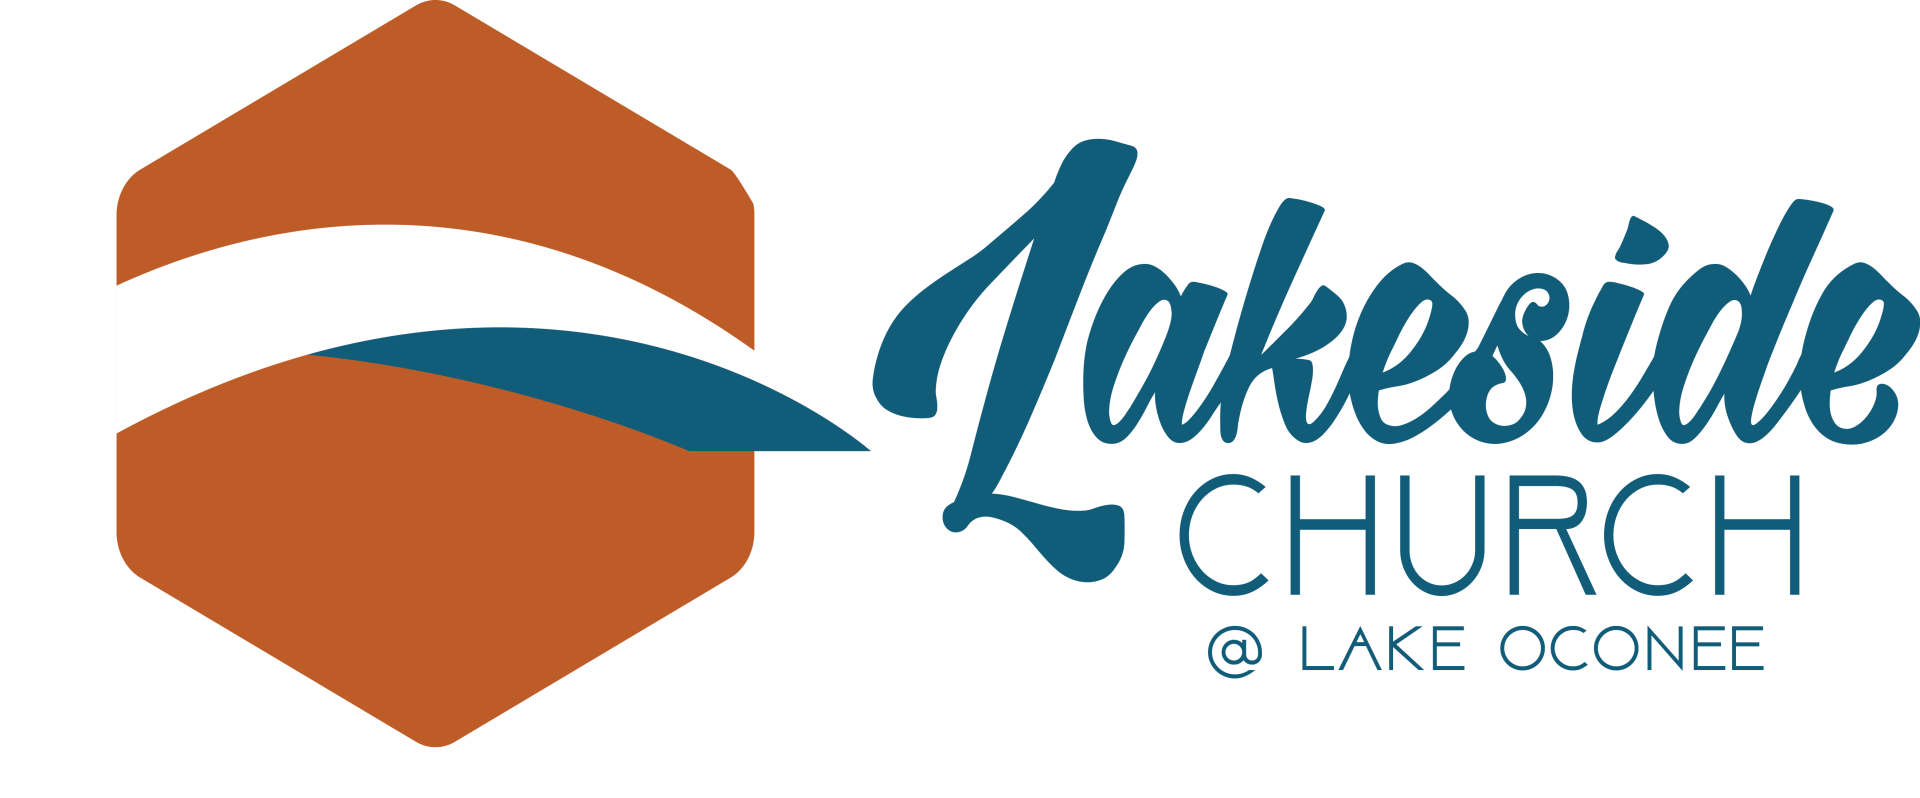 Lakeside Church Logo